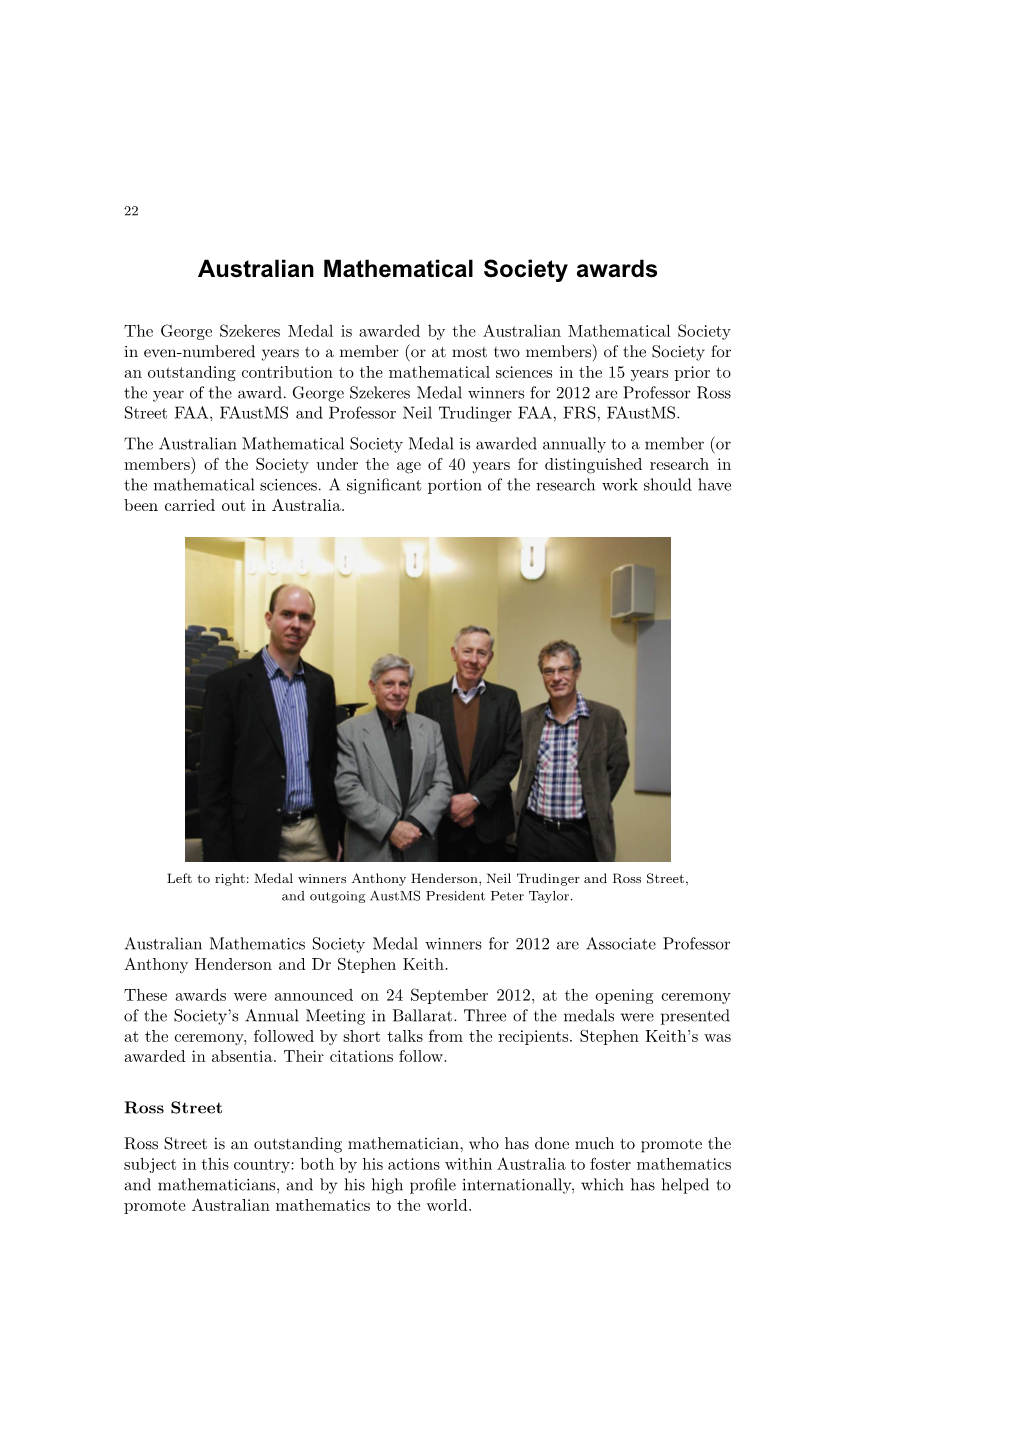 Australian Mathematical Society Awards